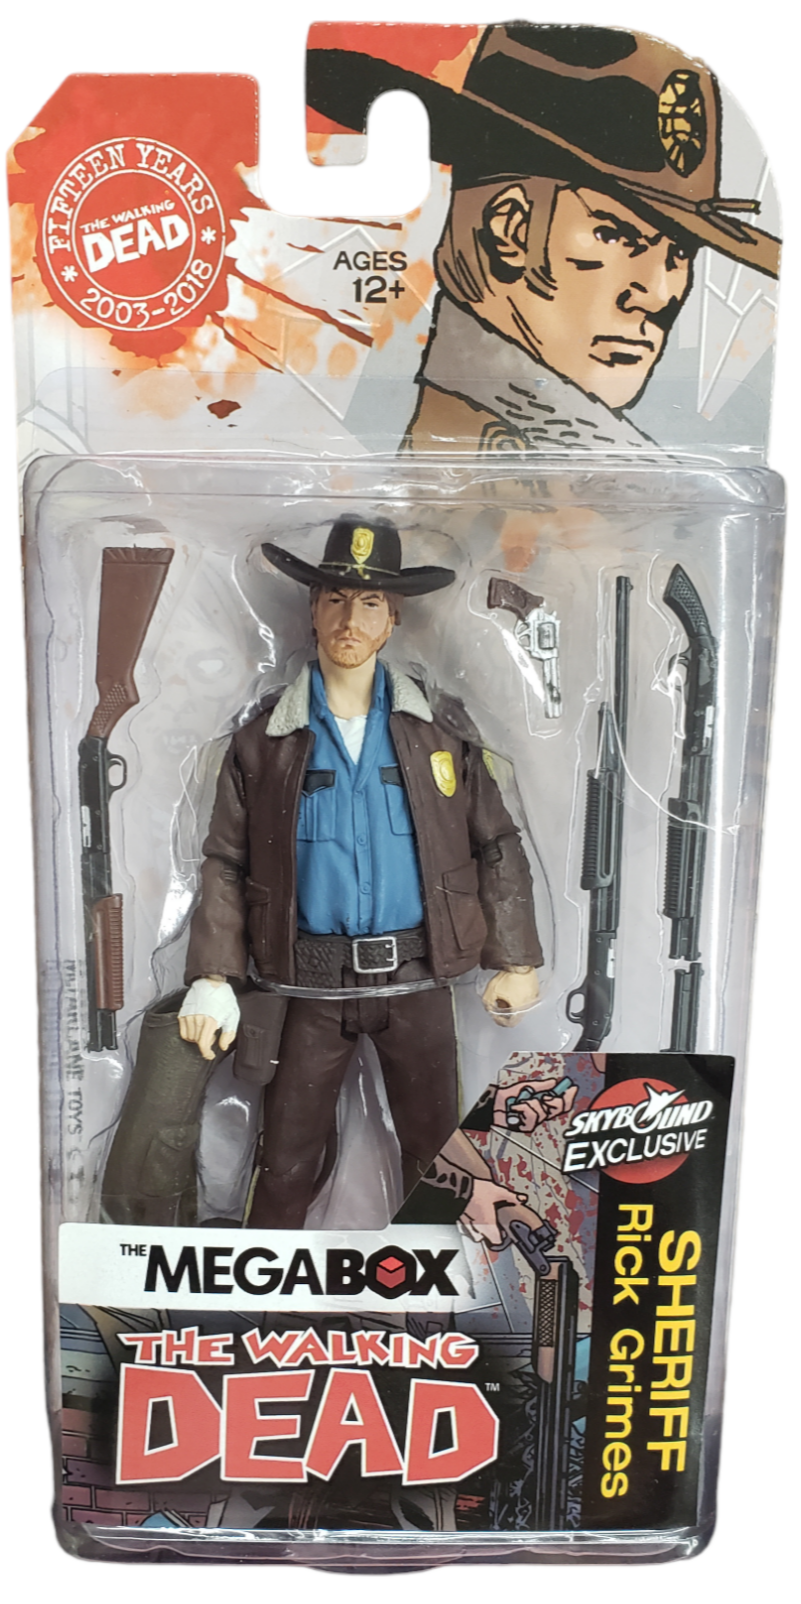 2018 Skybound Exclusive The Megabox Walking Dead Sheriff Rick Grimes Action Figure